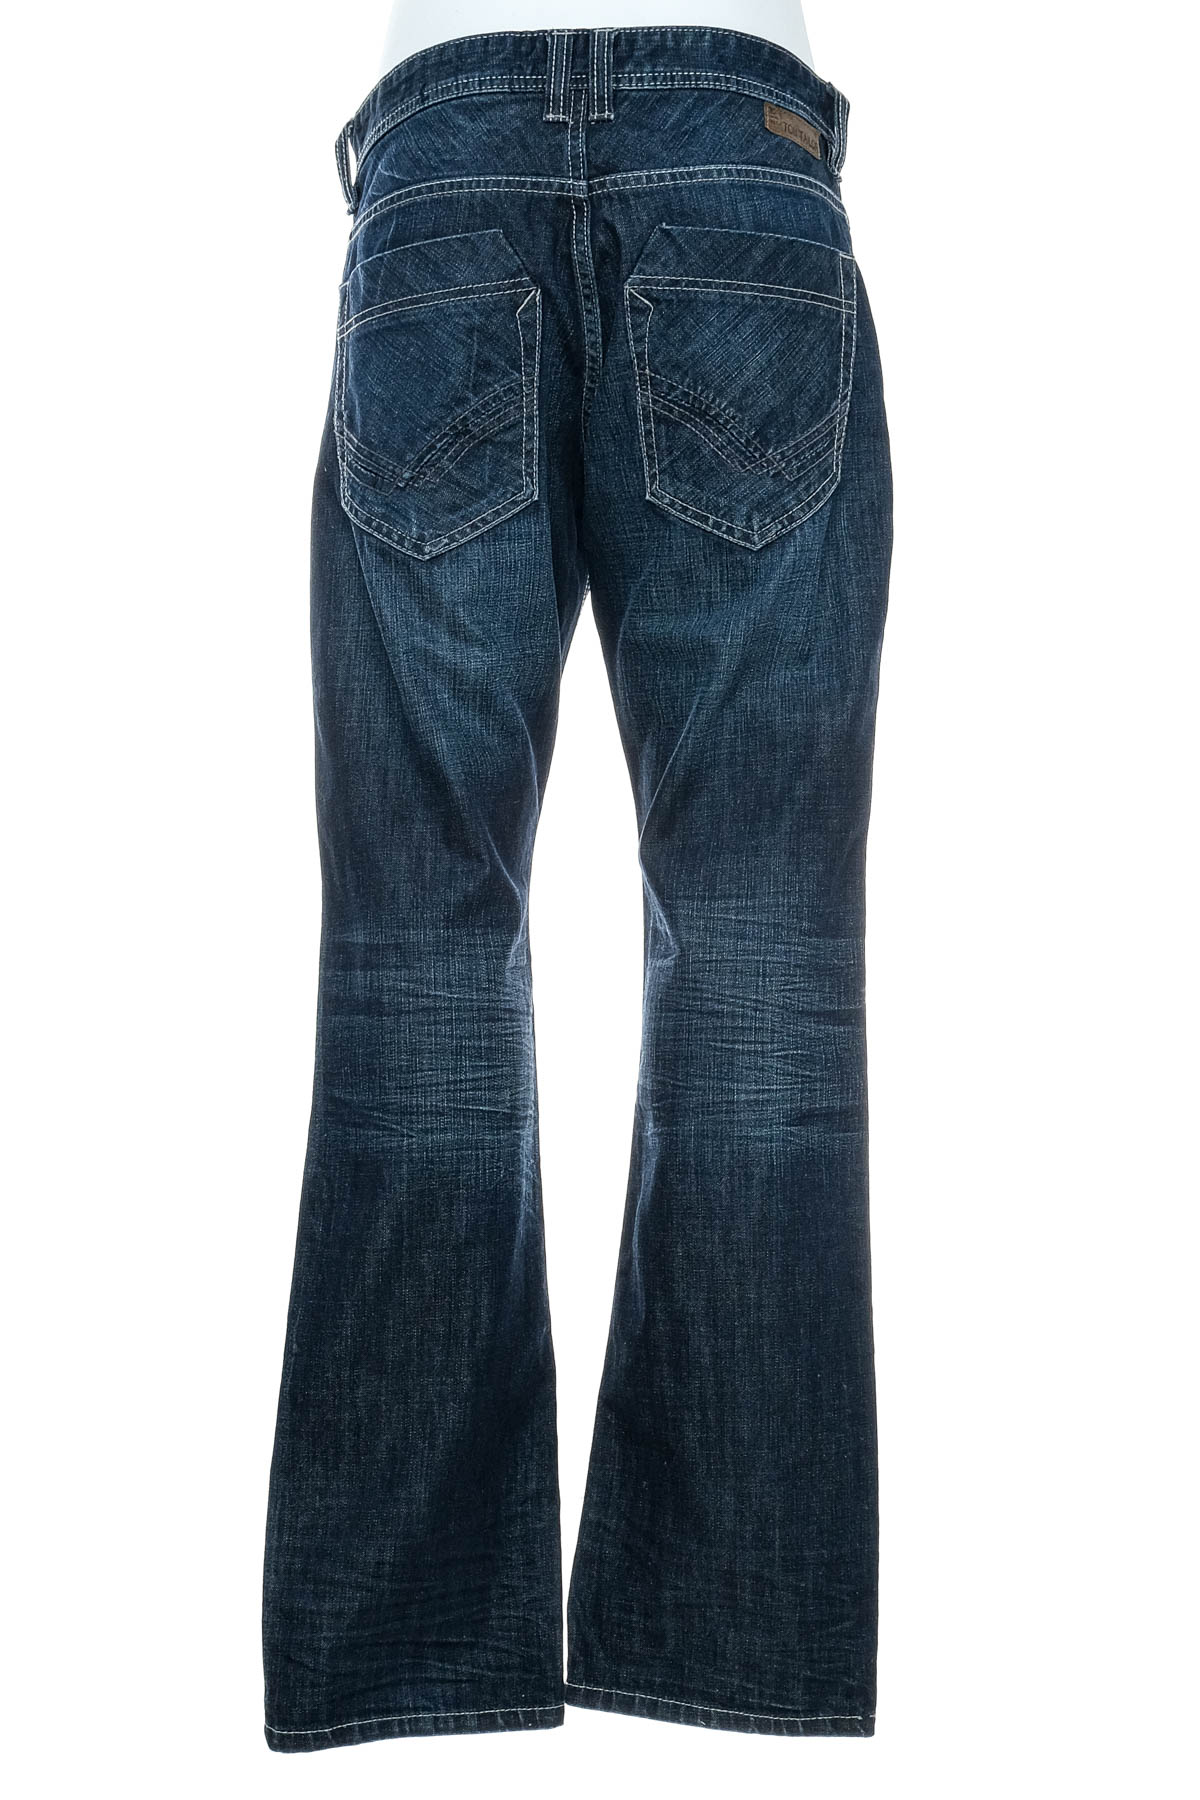 Men's jeans - TOM TAILOR - 1